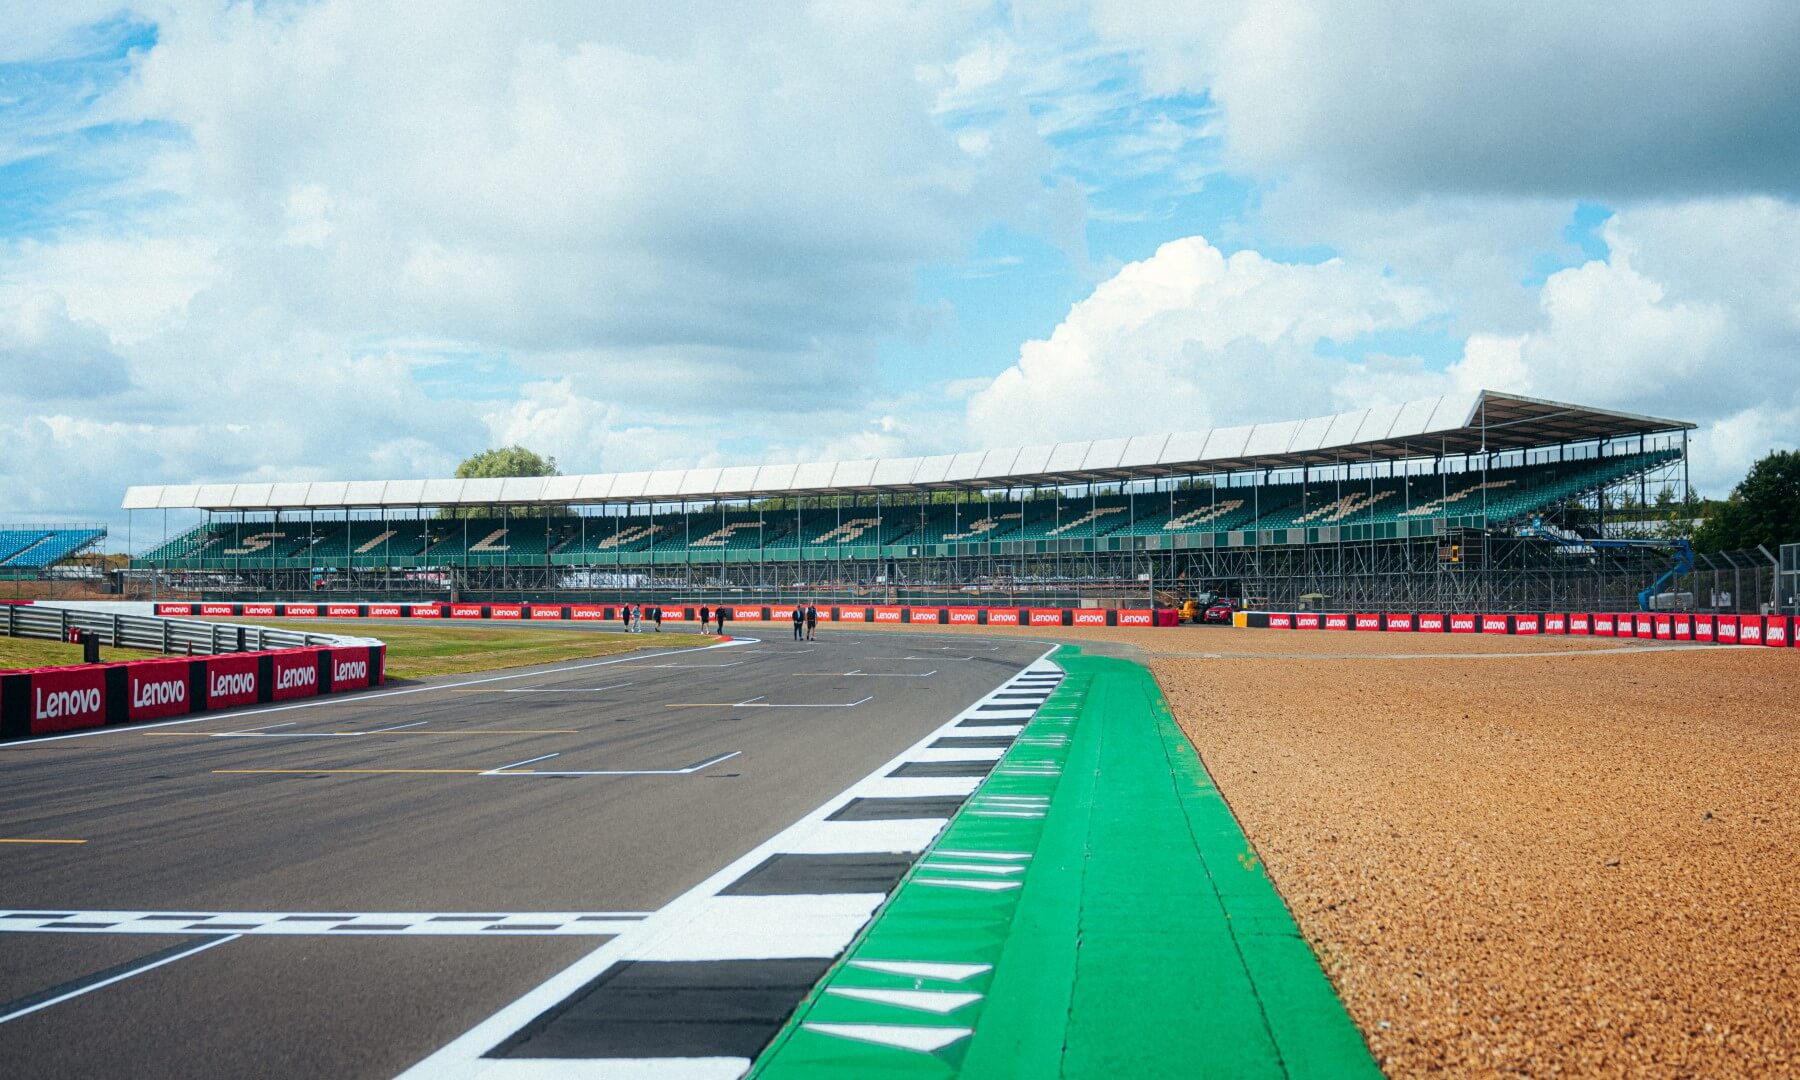 2023 British Grand Prix